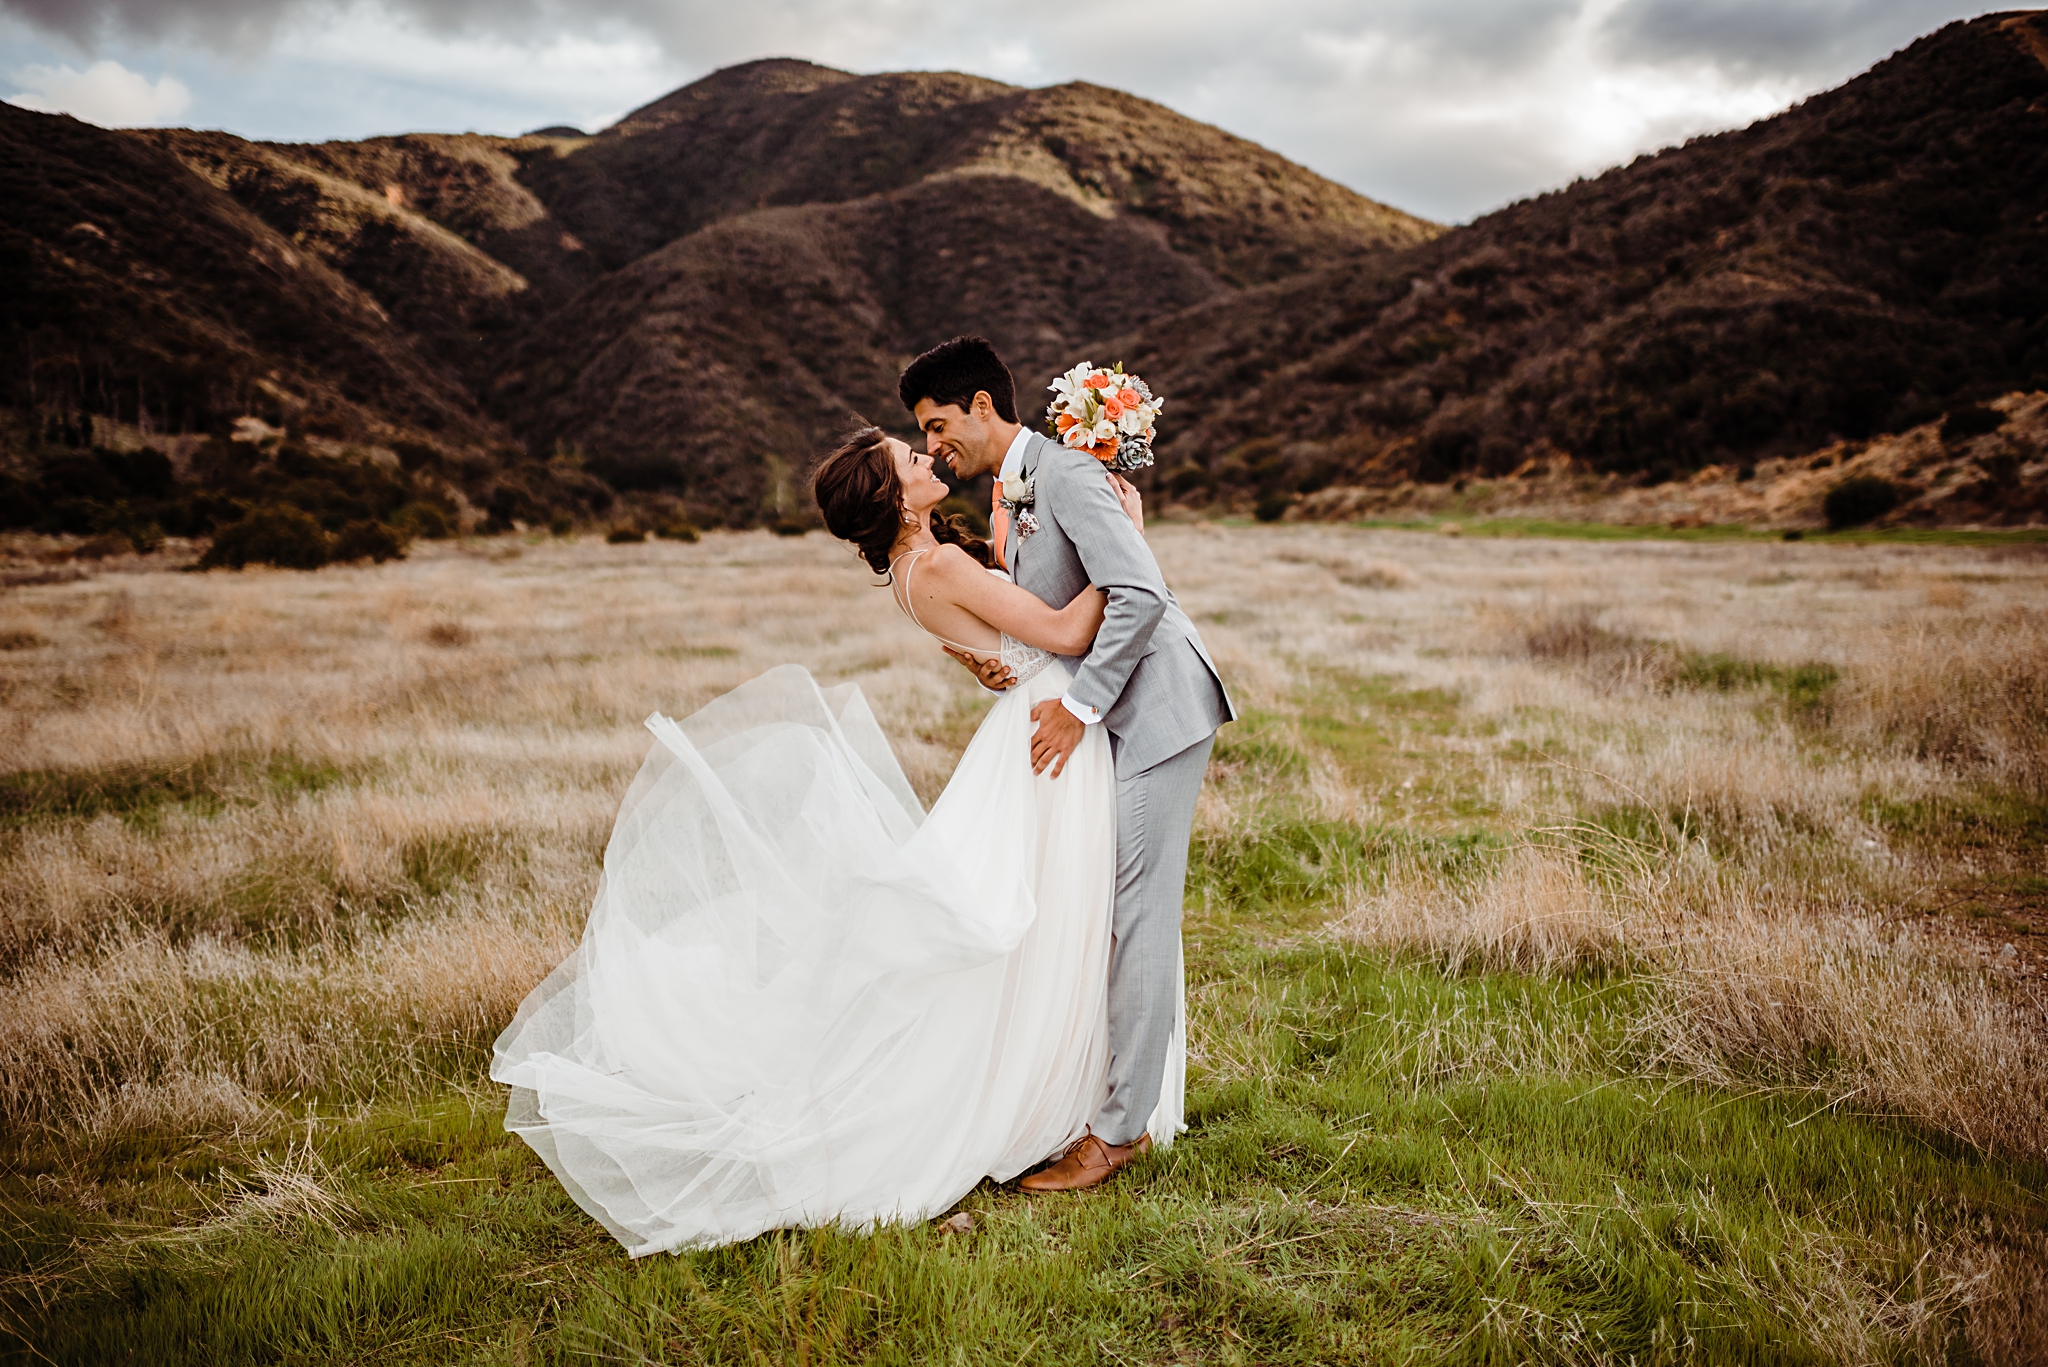 skyline drive trail wedding photos in corona